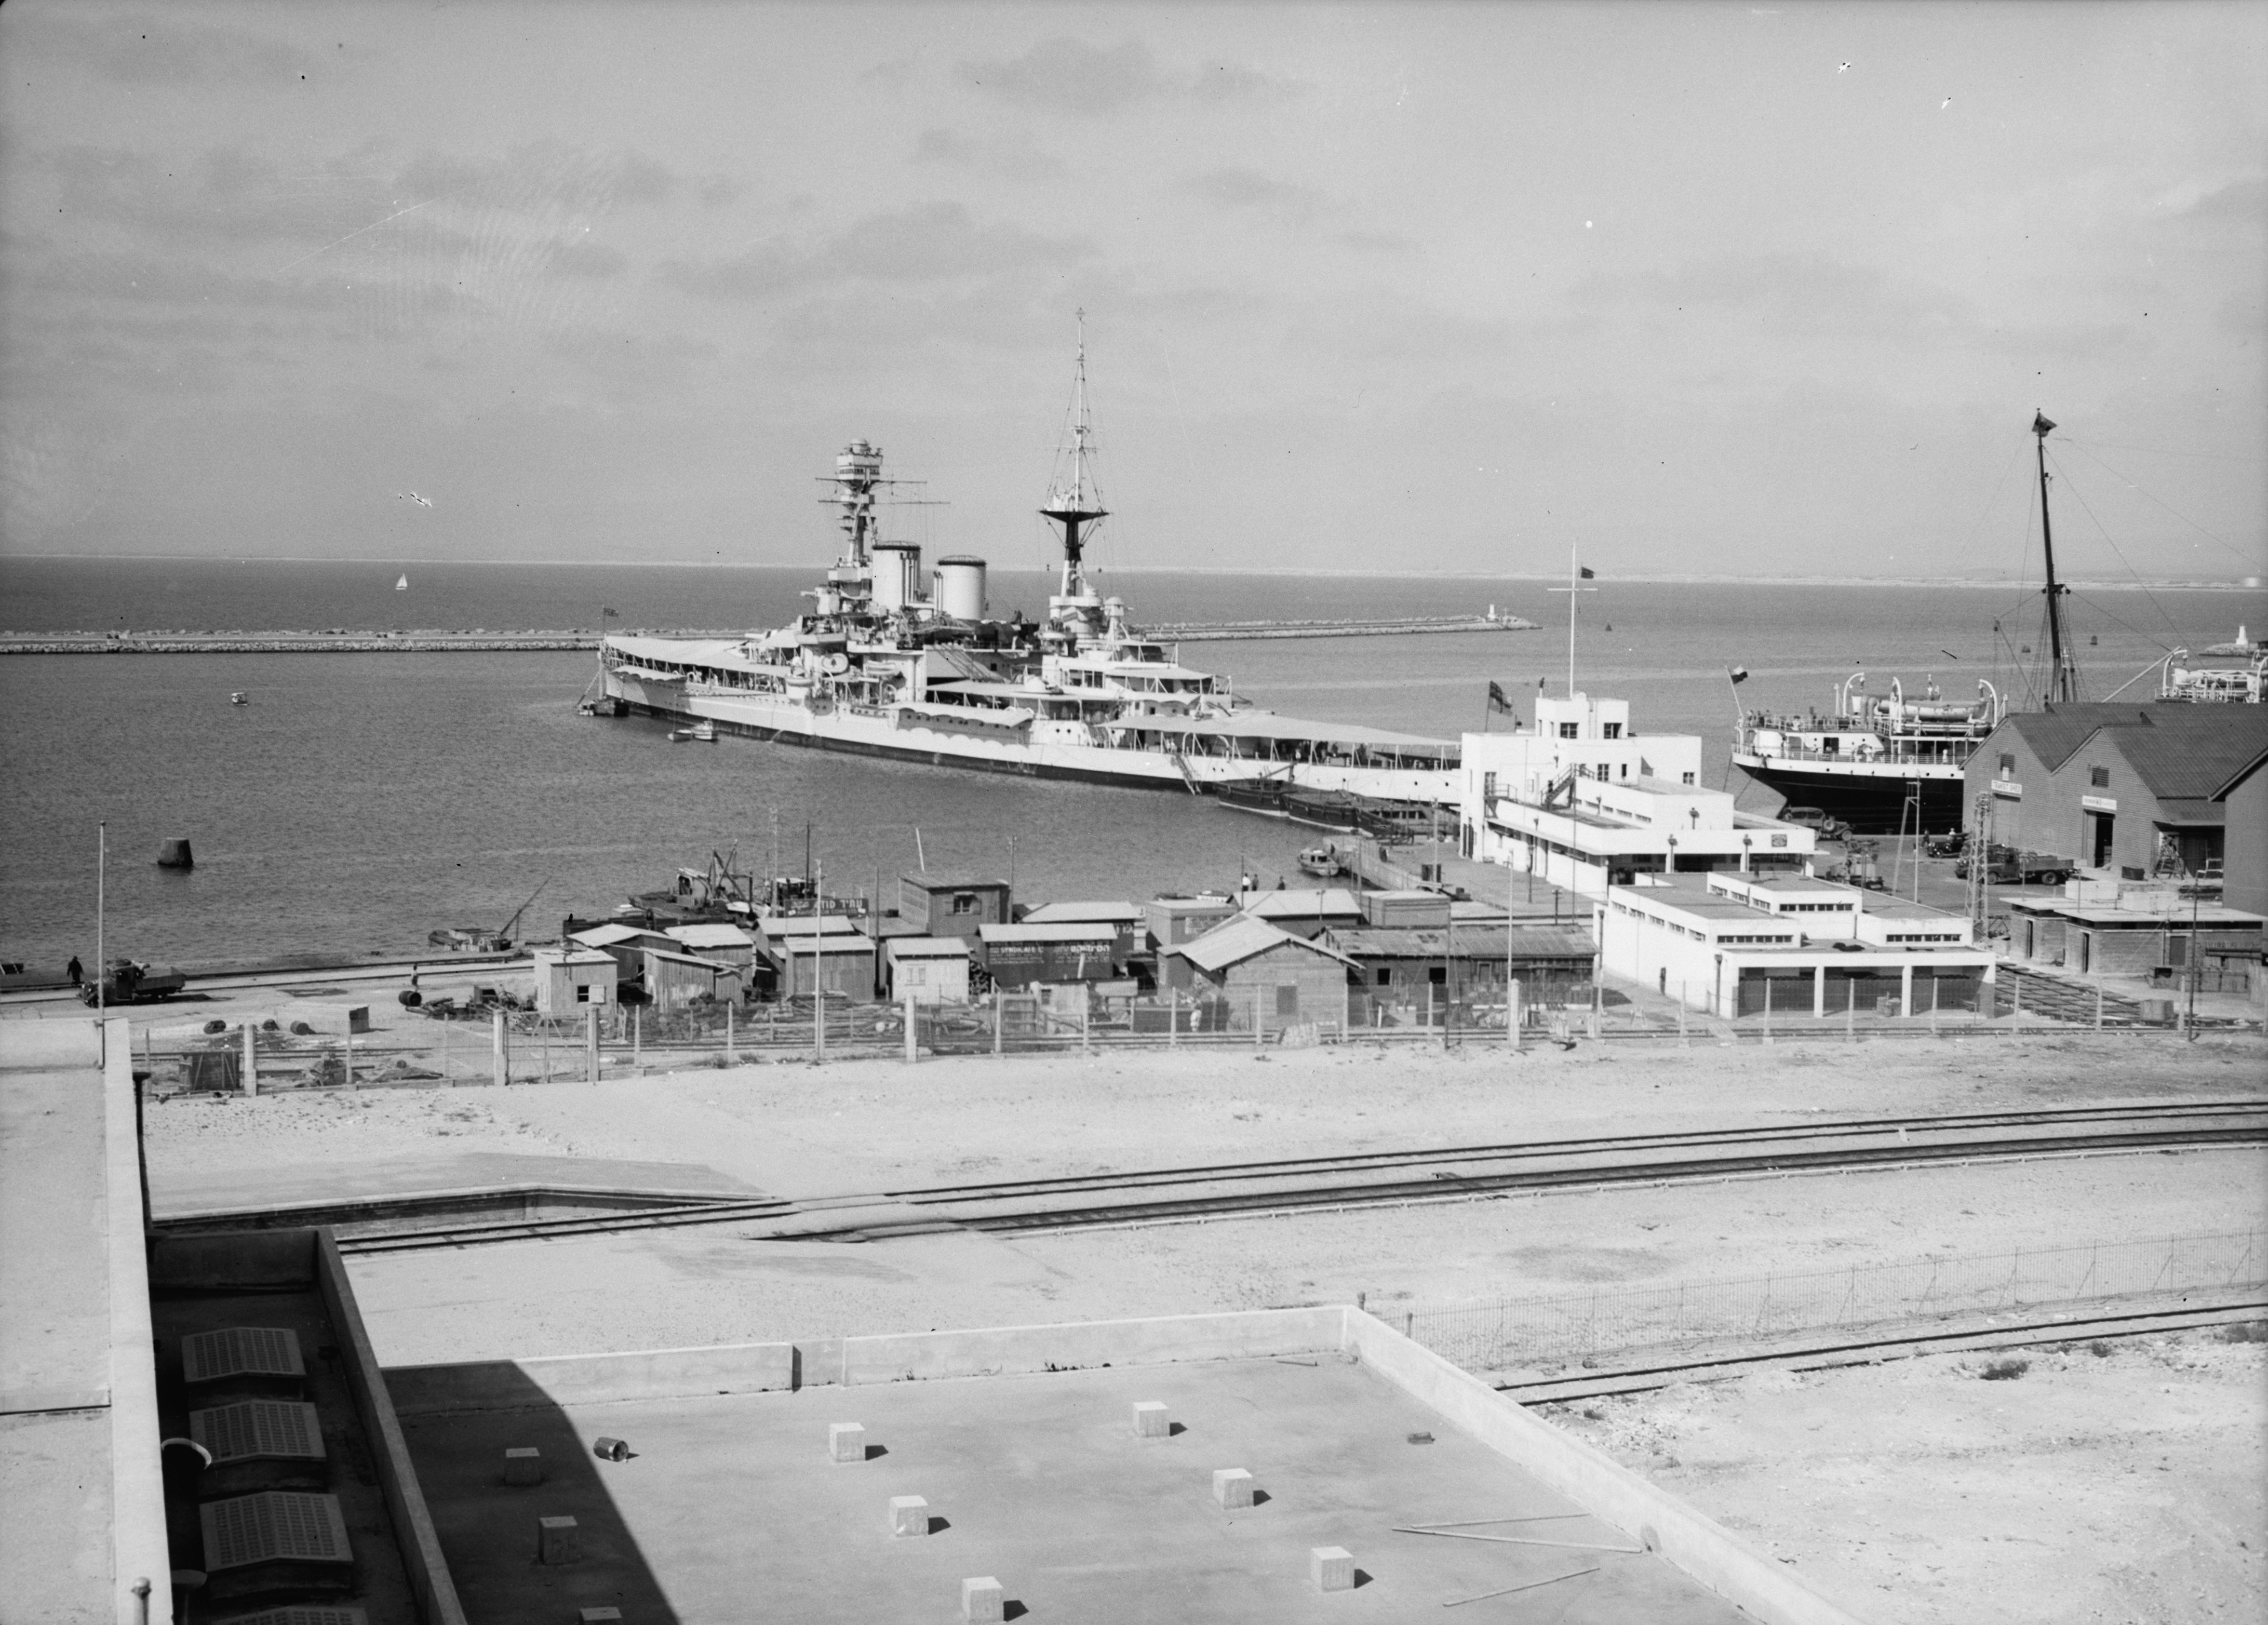 HMS Repulse docked at Haifa, Palestine, Jul 1938, photo 3 of 4